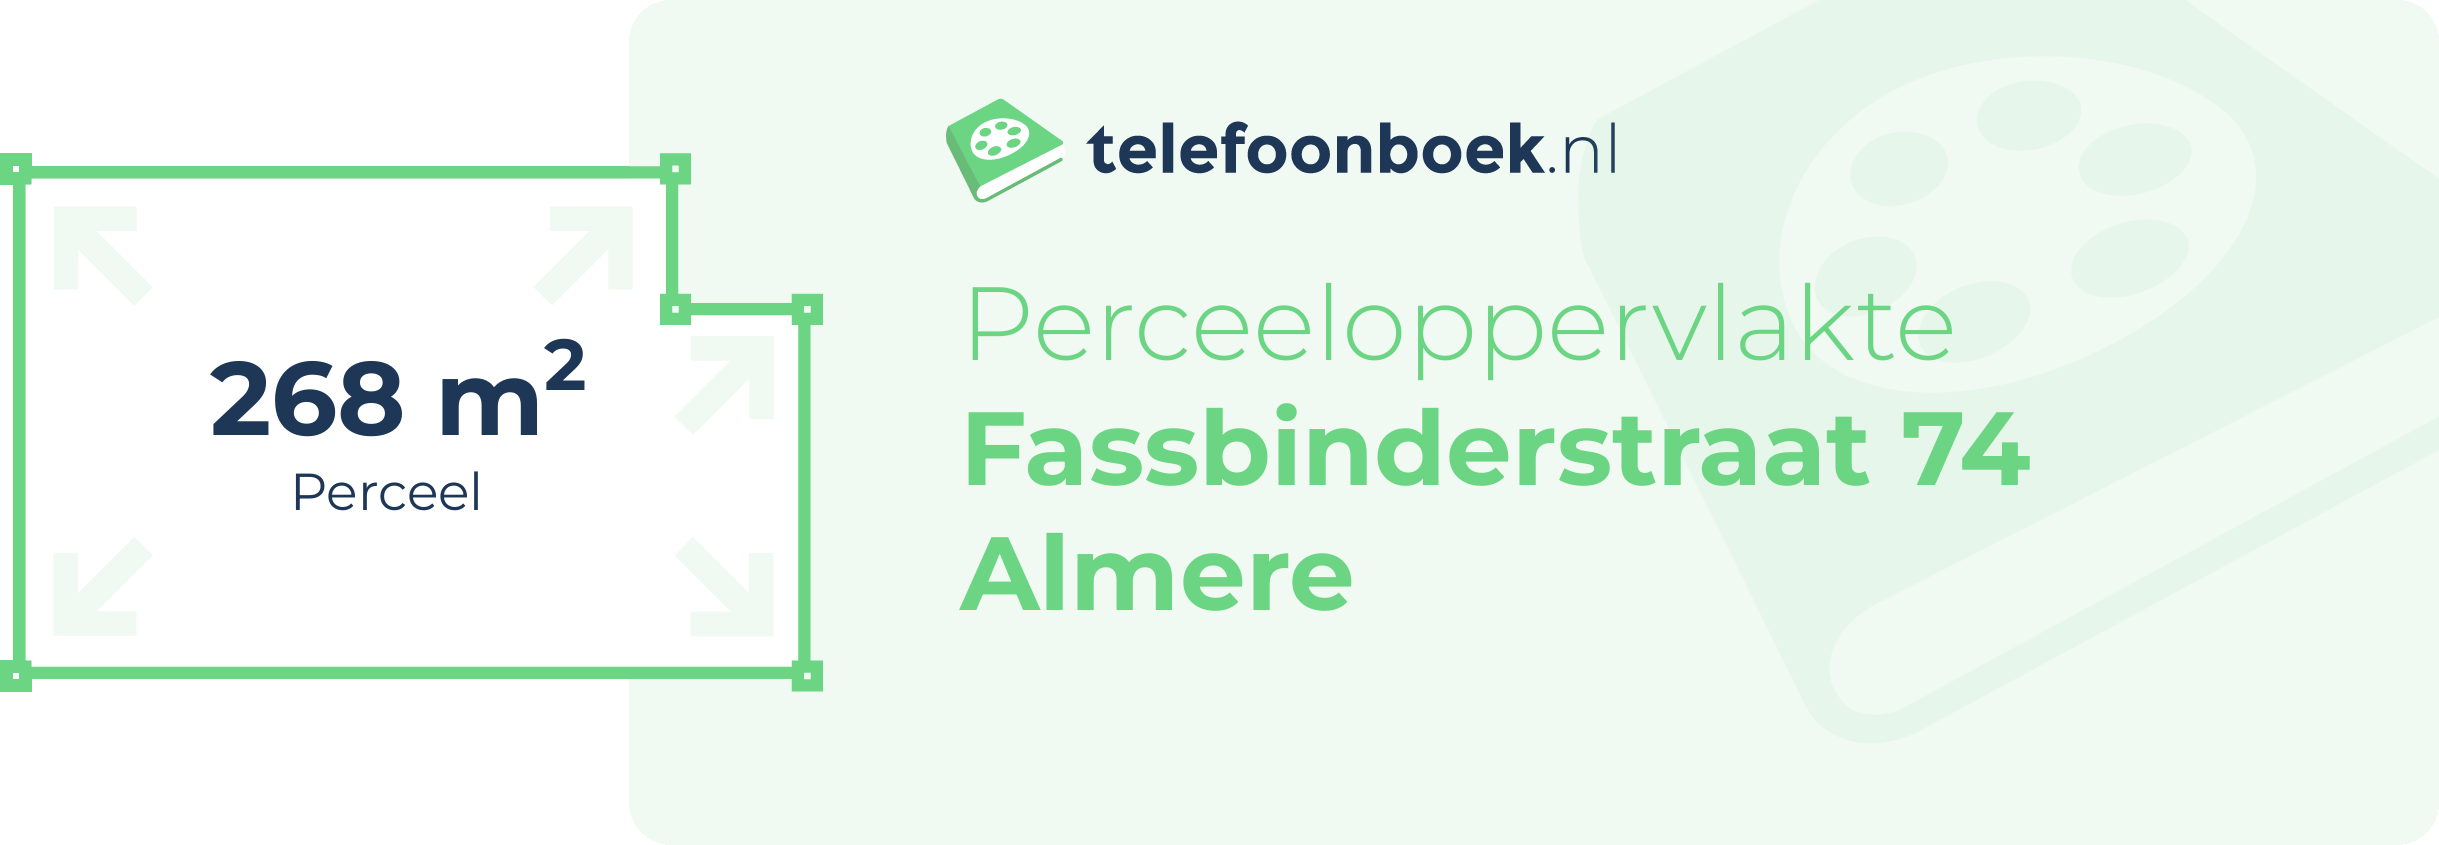 Perceeloppervlakte Fassbinderstraat 74 Almere